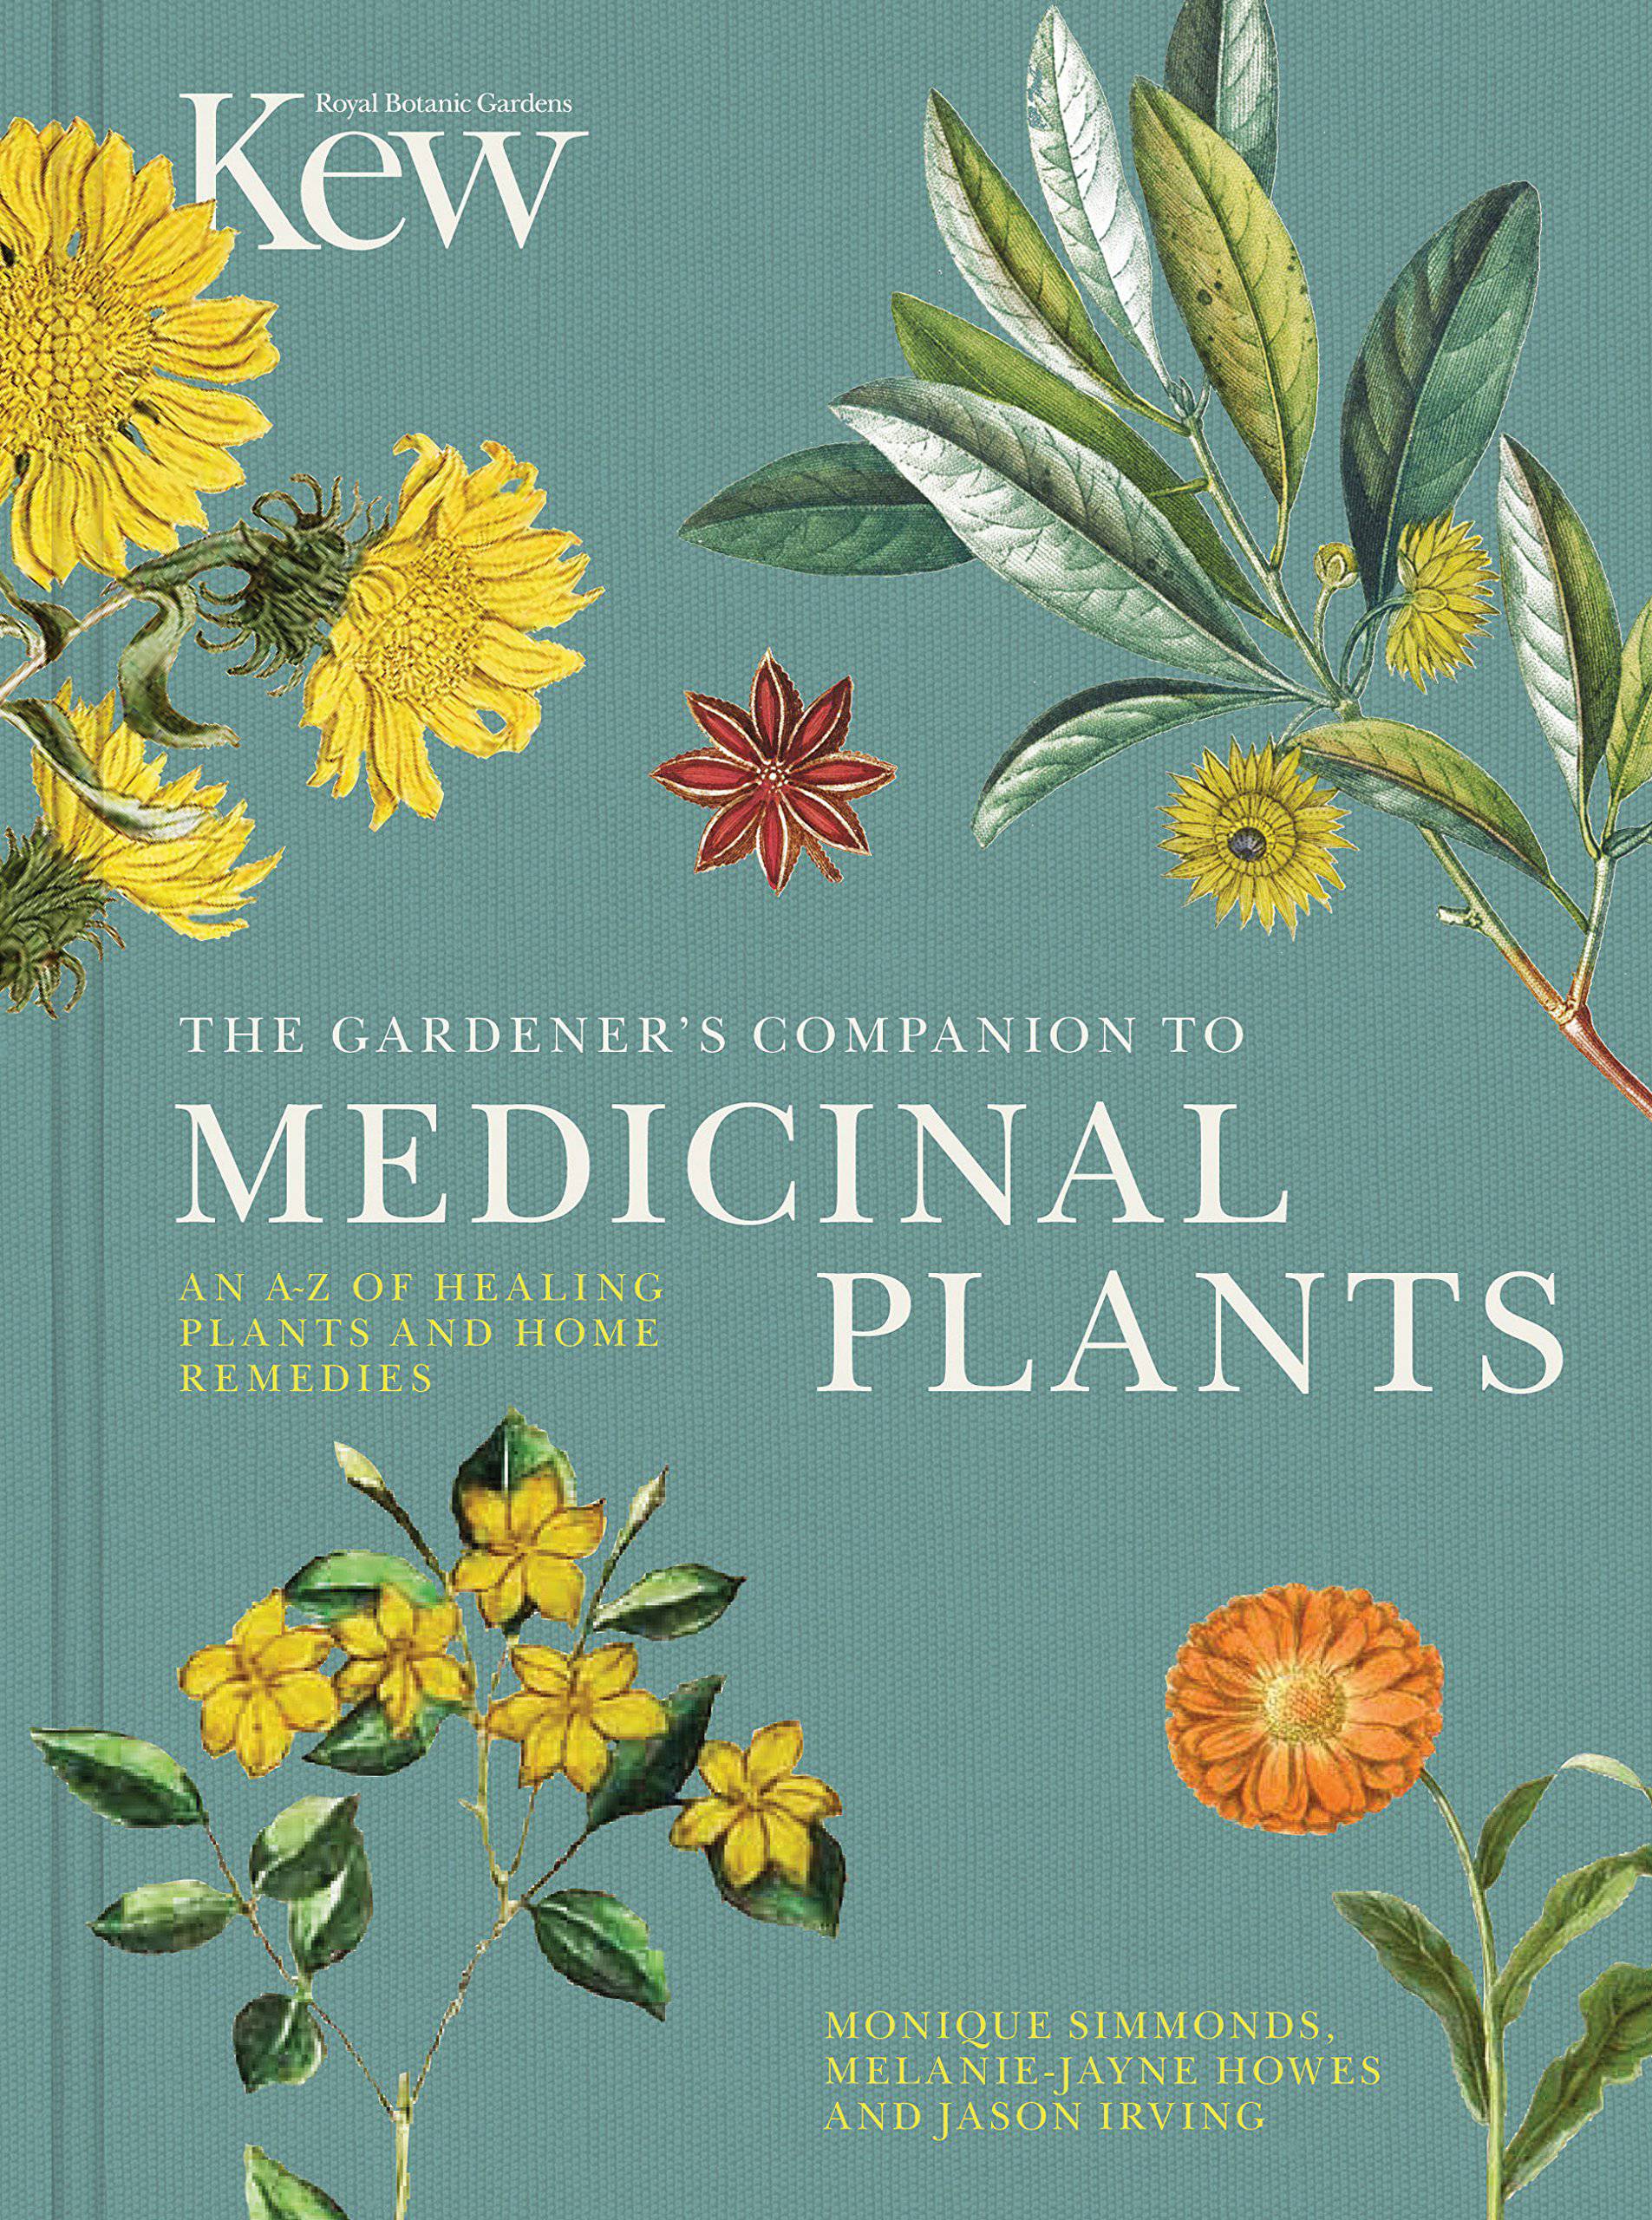 The gardener's companion to medicinal plants by Monique Simmonds, Melanie Jayne Howes & Jason Irving